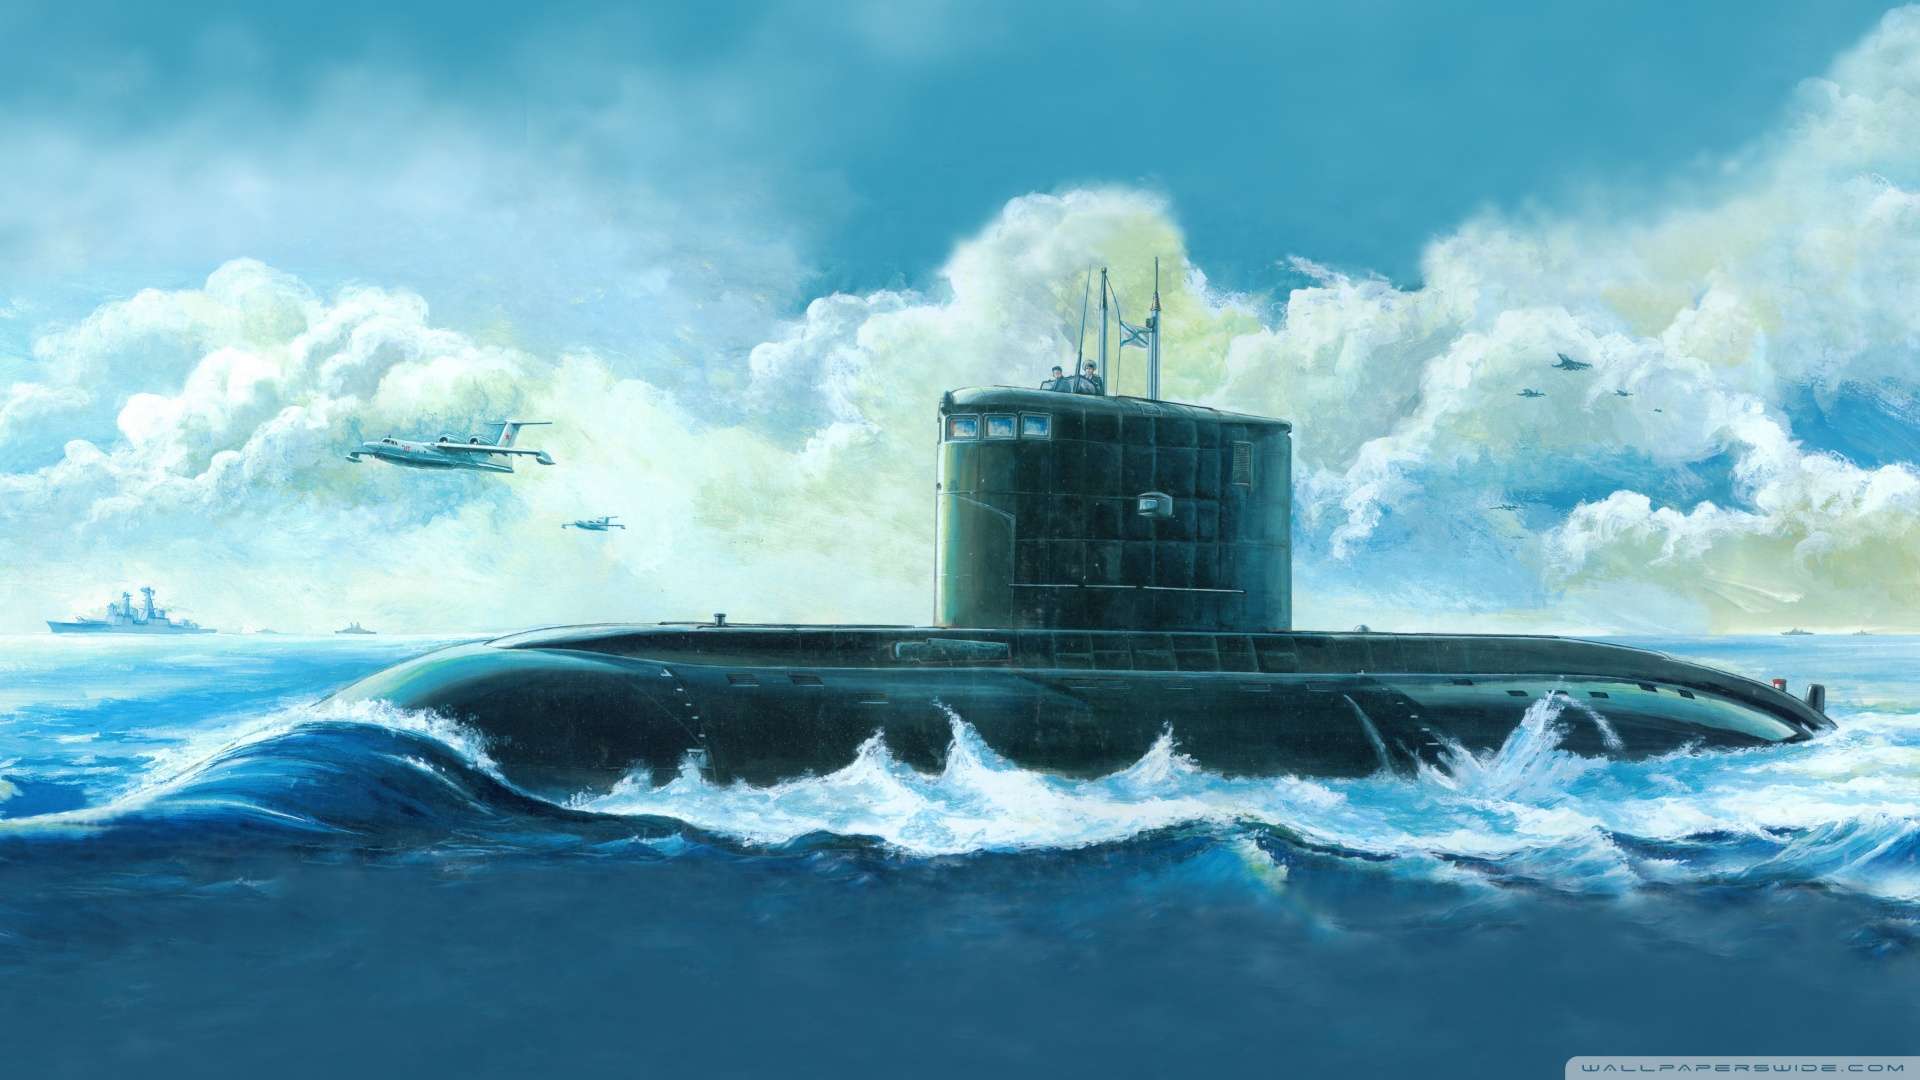 Wallpaper Submarine Painting Wallpaper 1080p HD Upload at December